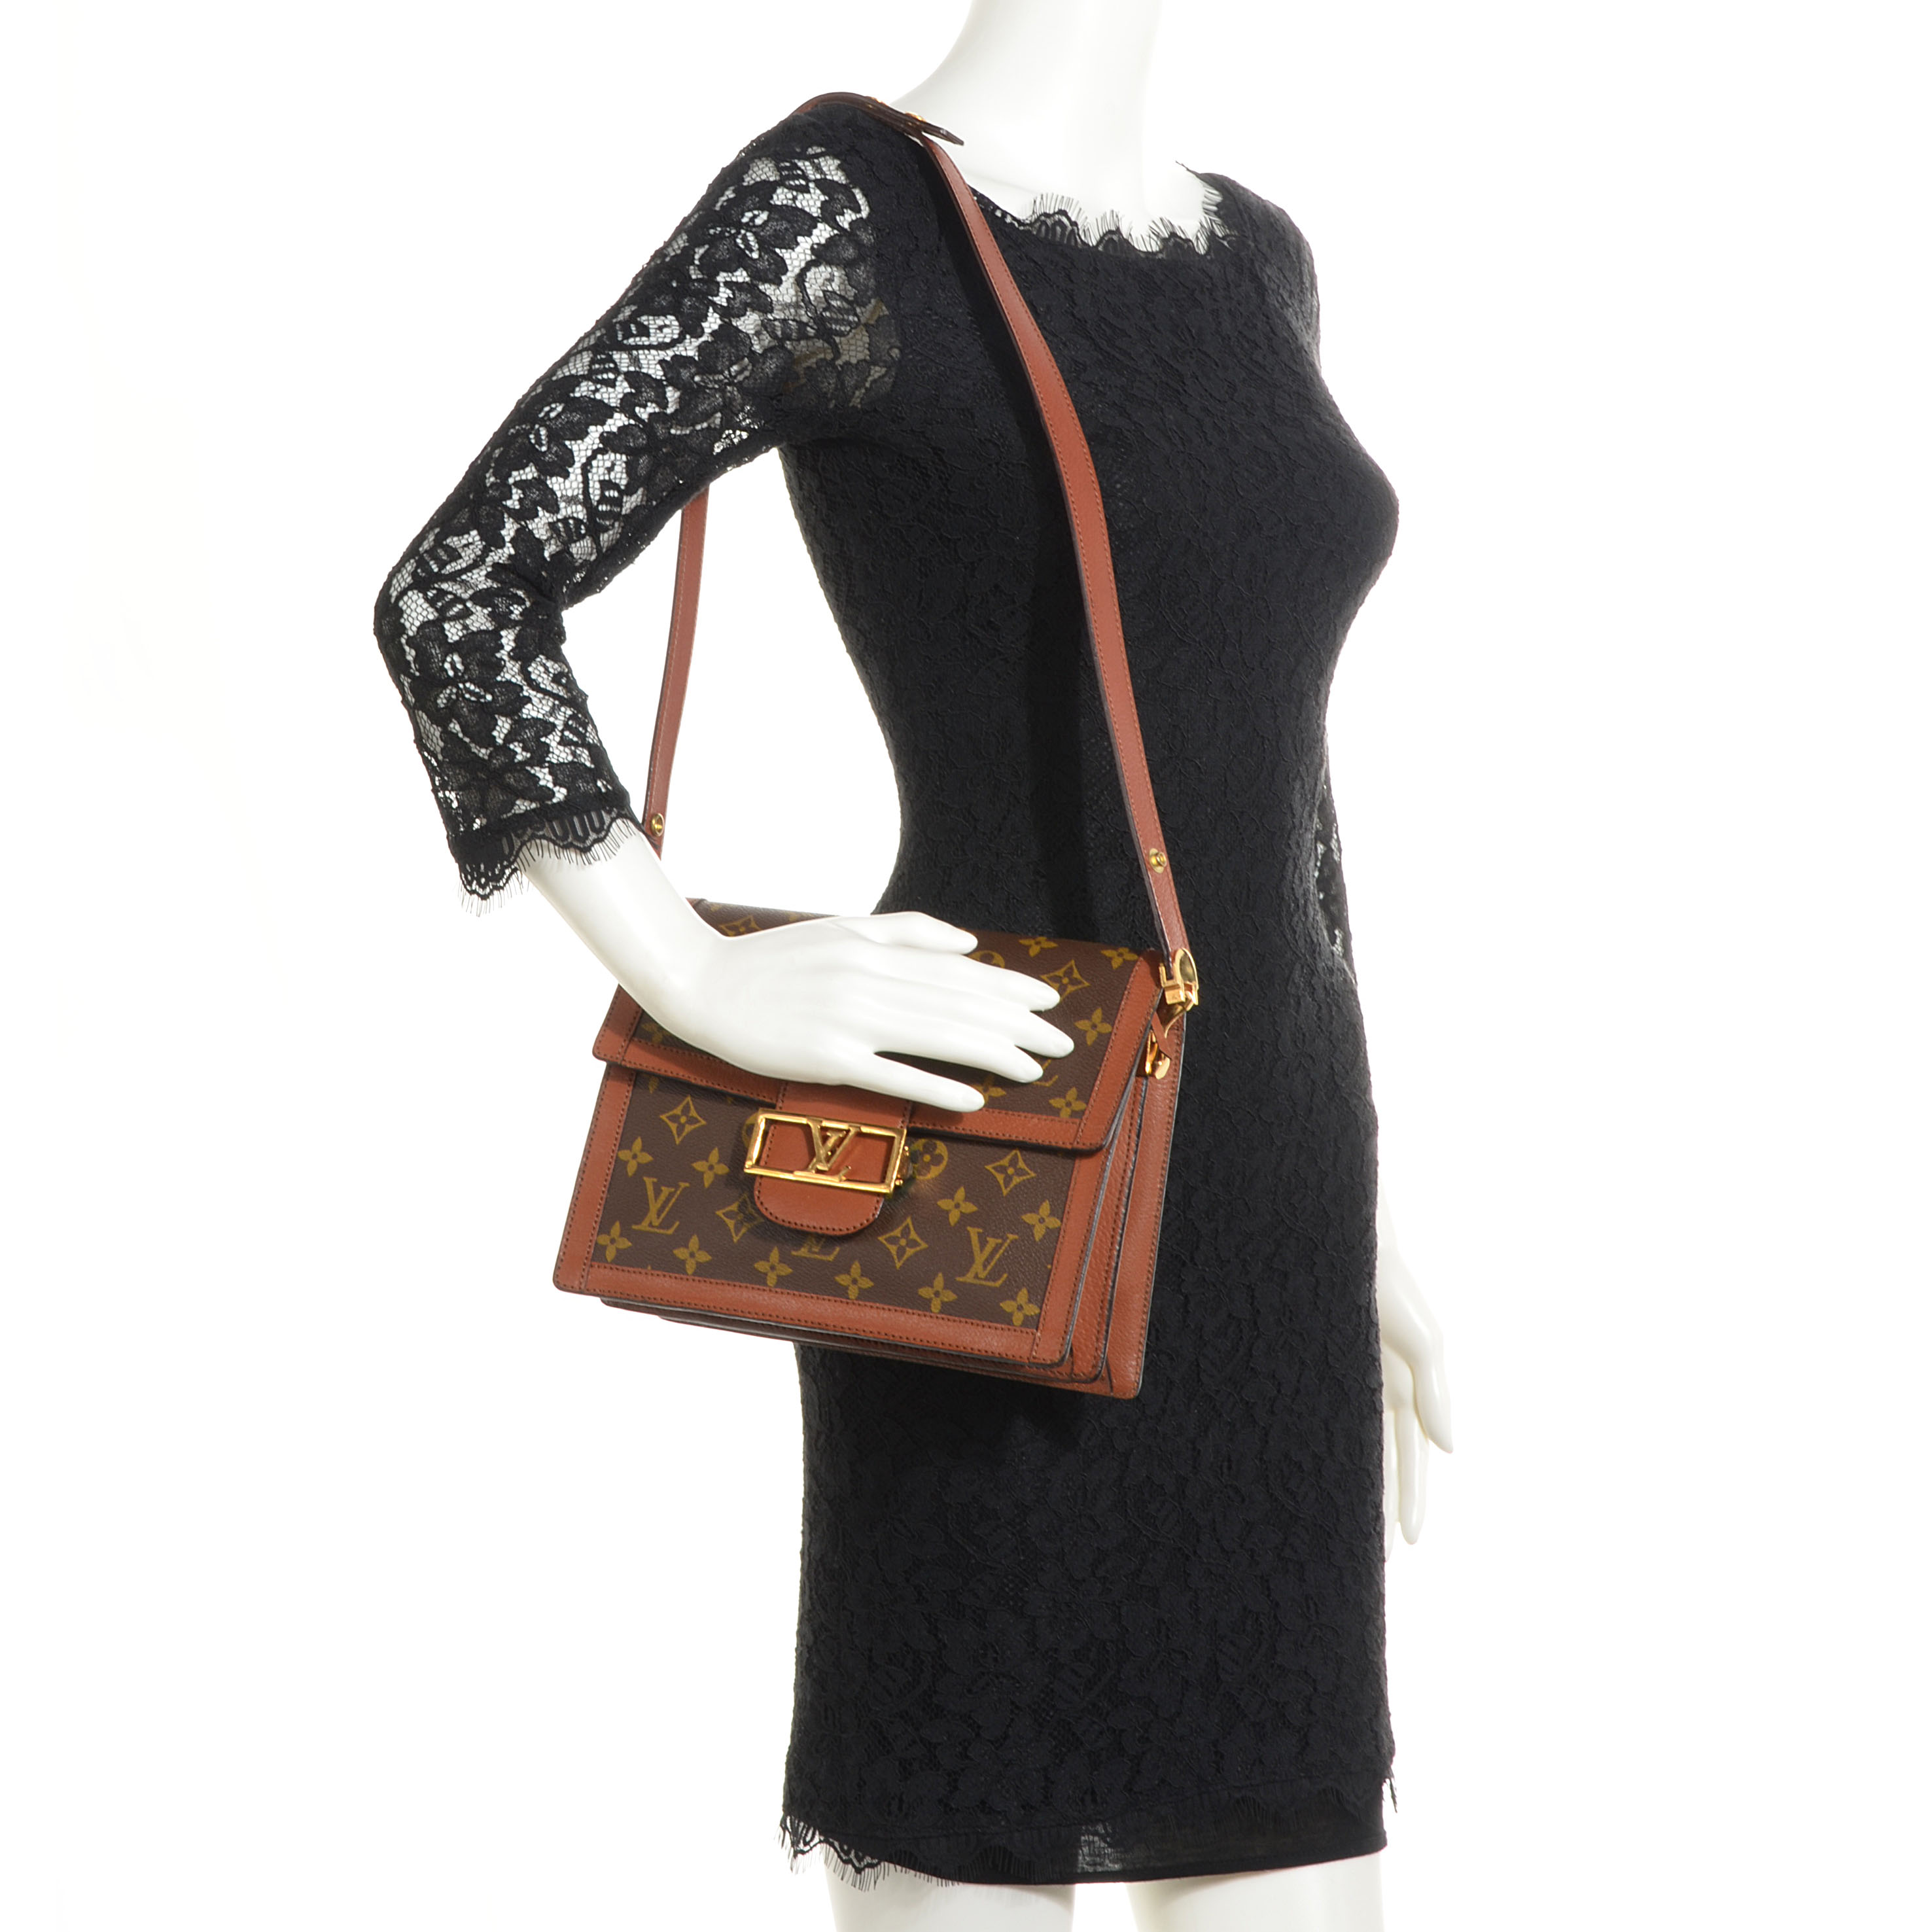 Dauphine MM Monogram - Handbags, LOUIS VUITTON ® #Louisvuittonhandbags